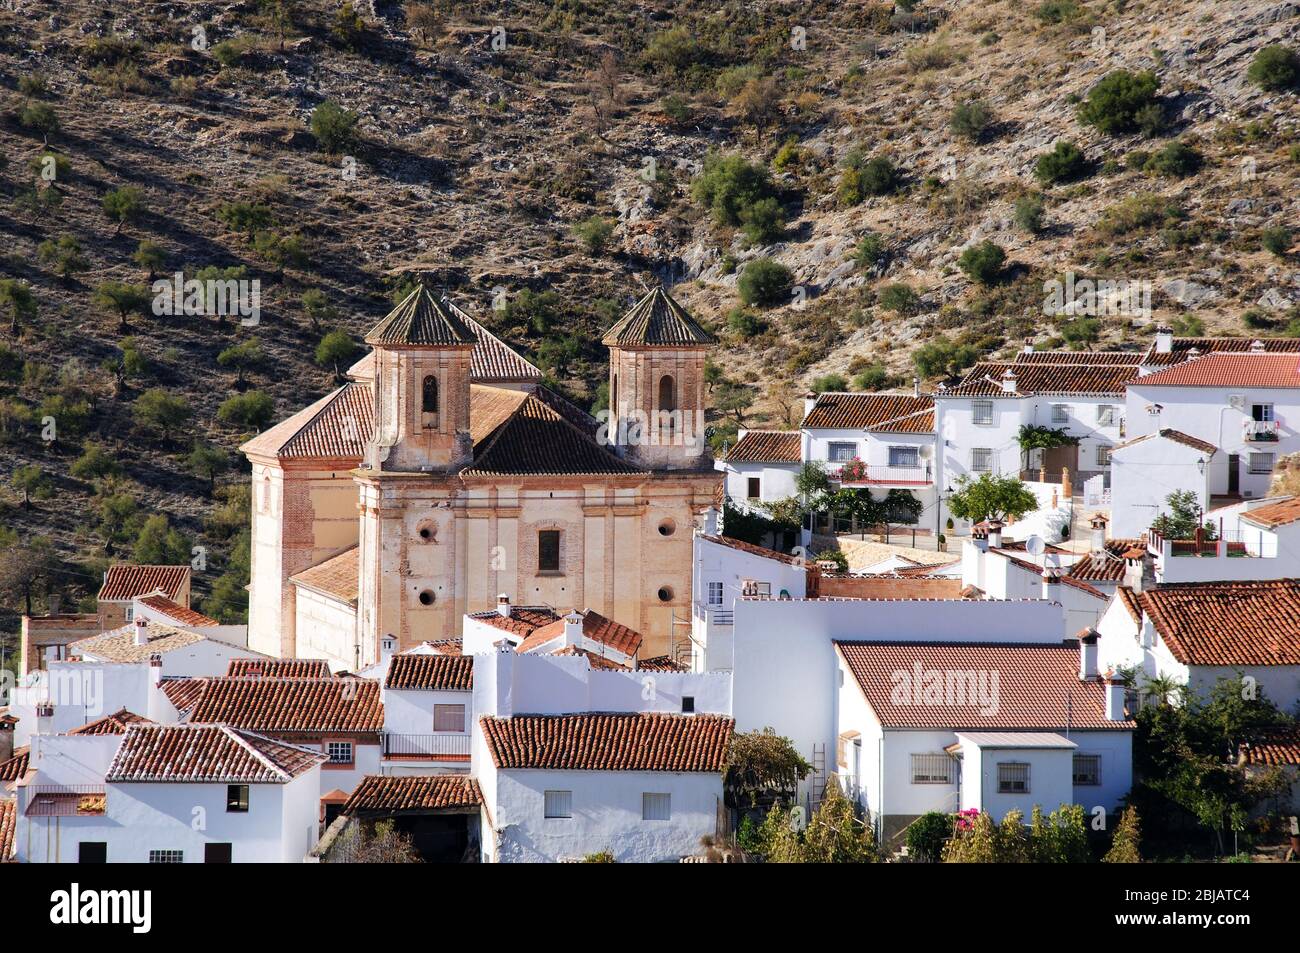 View of whitewashed village (pueblo blanco) with mountains to the rear, Alpandeire, Serrania de Ronda, Malaga Province, Andalucia, Spain. Stock Photo